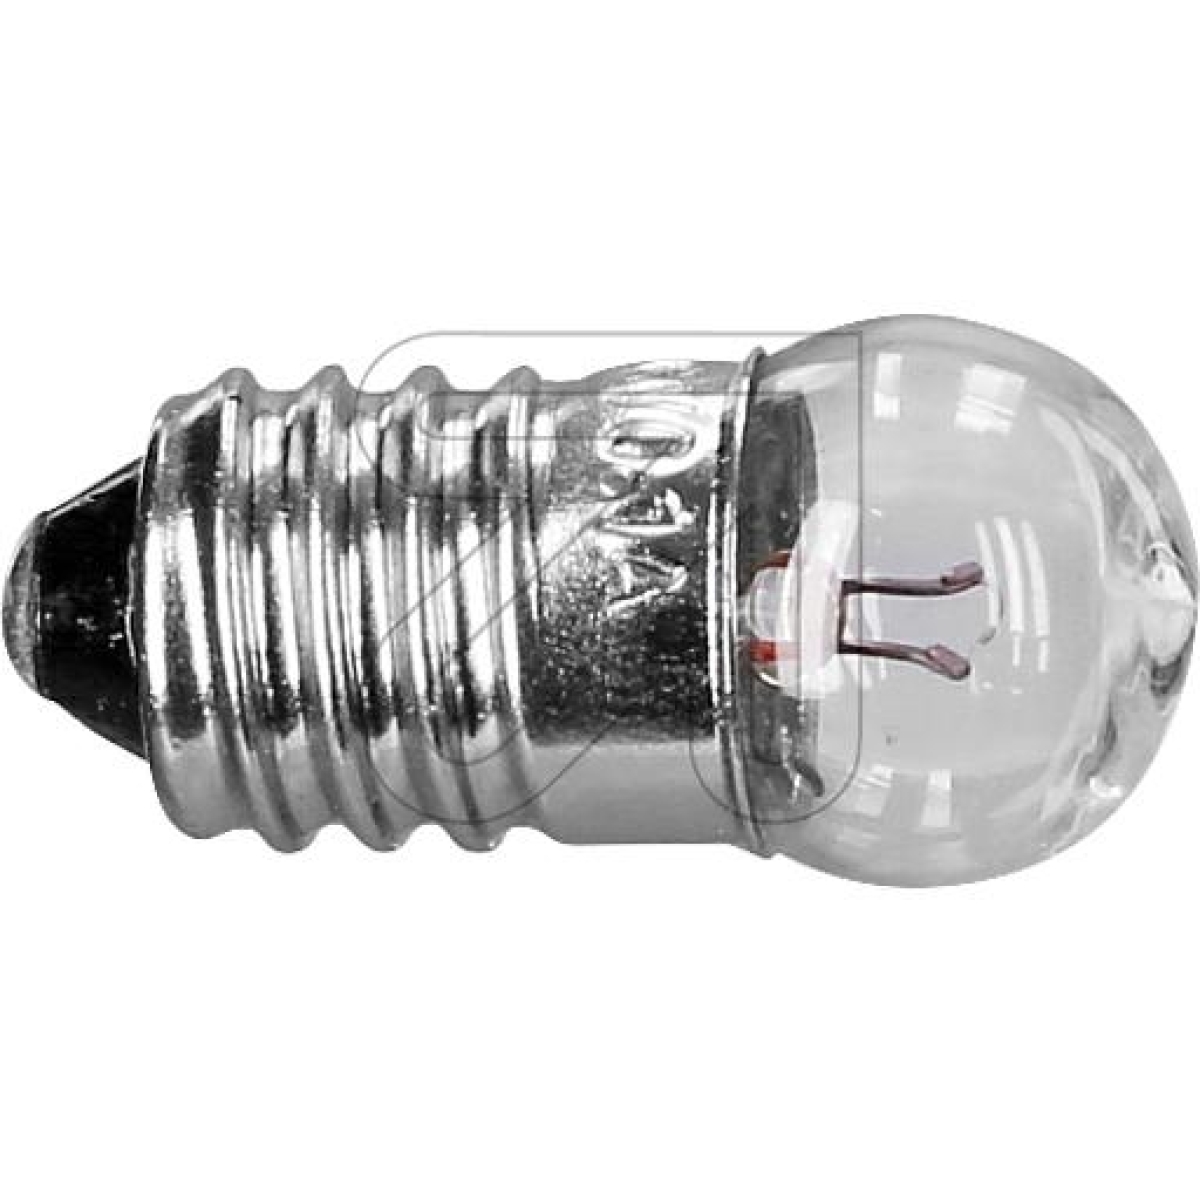 BarthelmeBall lamp 6 V 0.6W/0.1A-Price for 10 pcs.